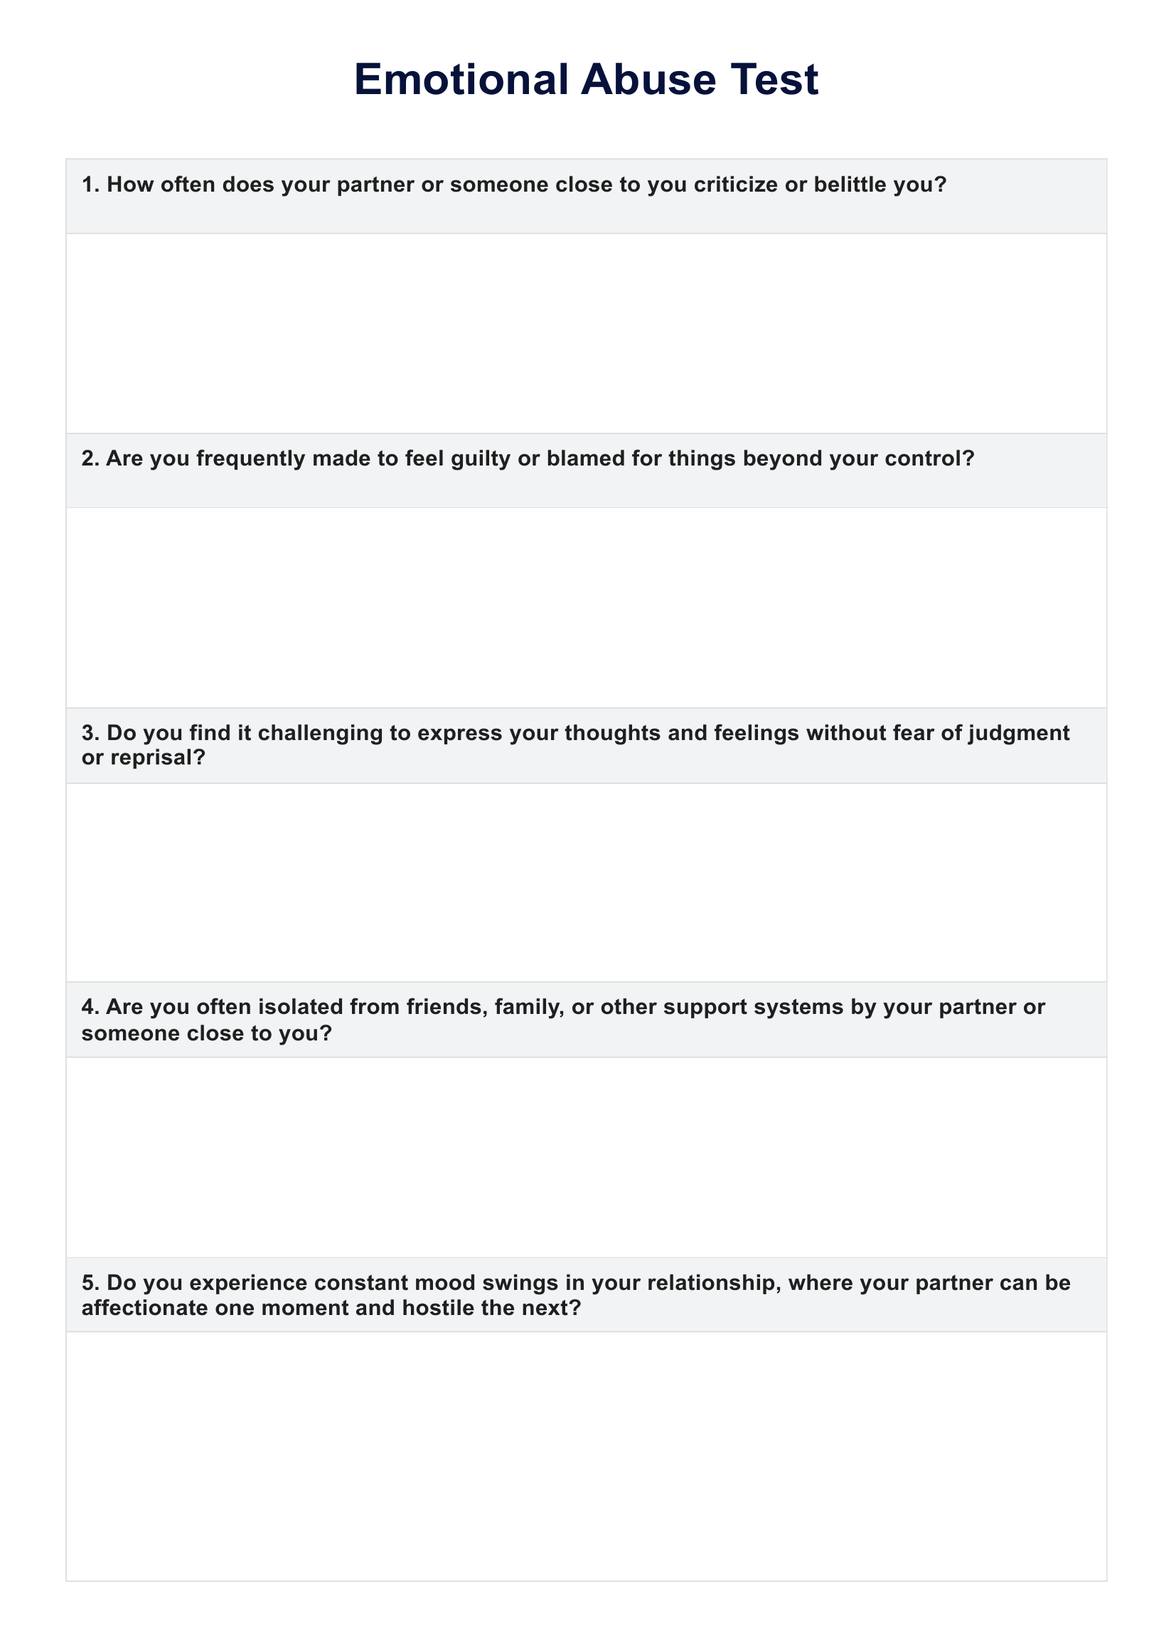 Emotional Abuse Test PDF Example